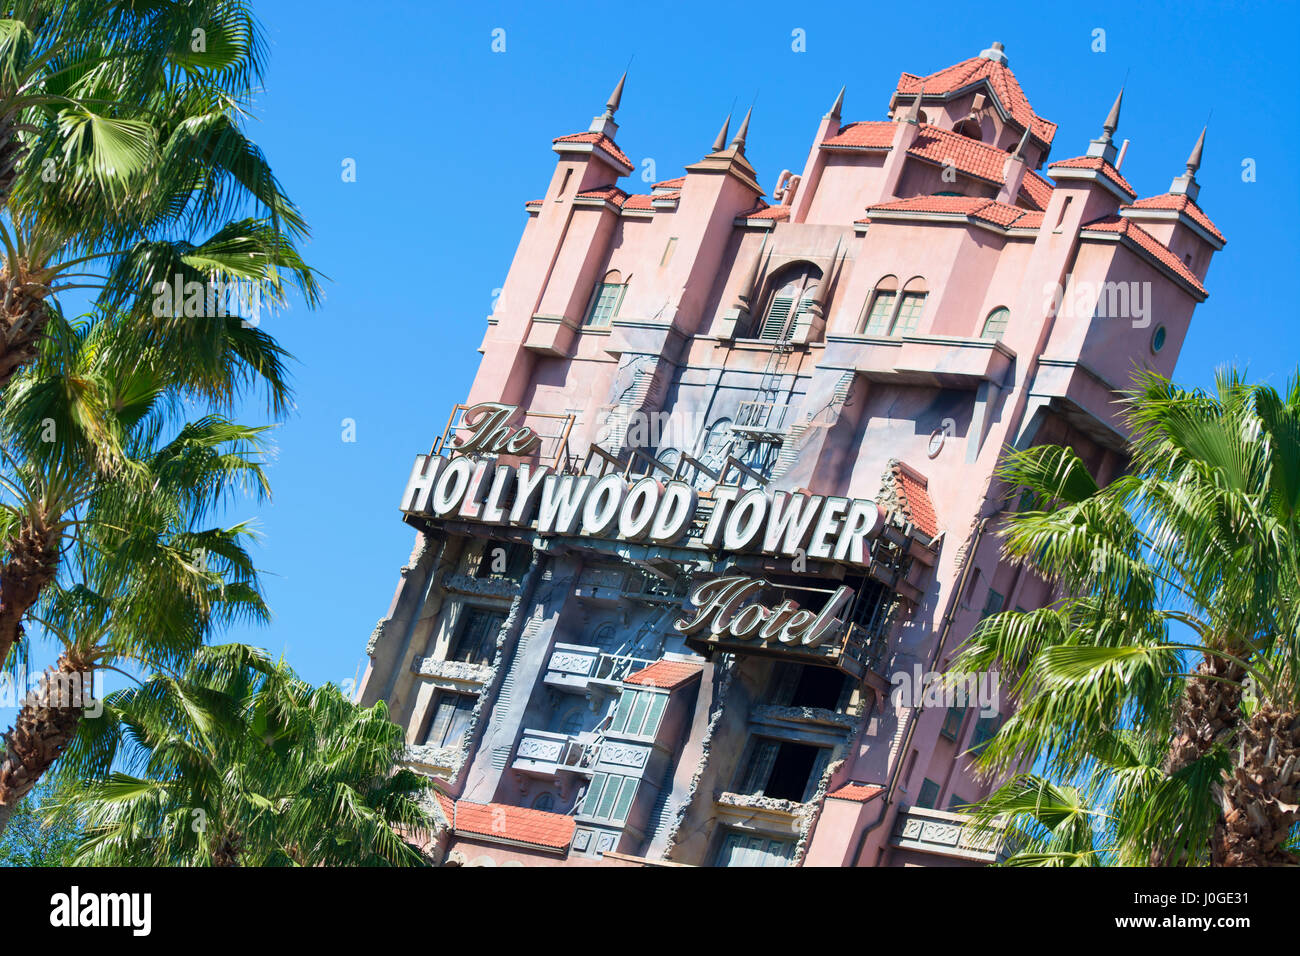 Hollywood Tower Hotel, Hollywood Tower of Terror, Hollywood Studios Disney World, Orlando Florida Stock Photo